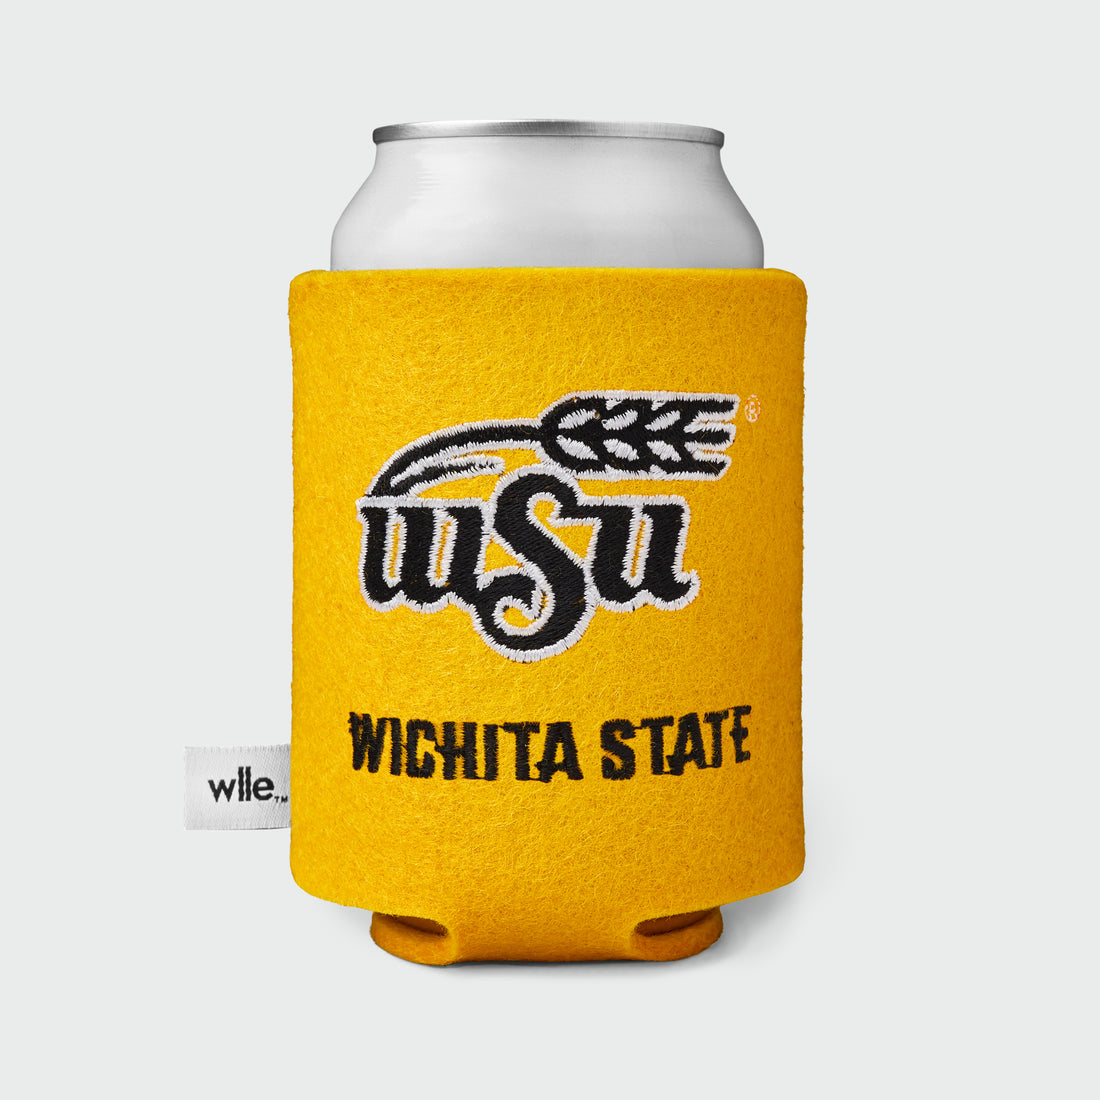 Wichita State University wlle™ Drink Sweater - WSU - Gold